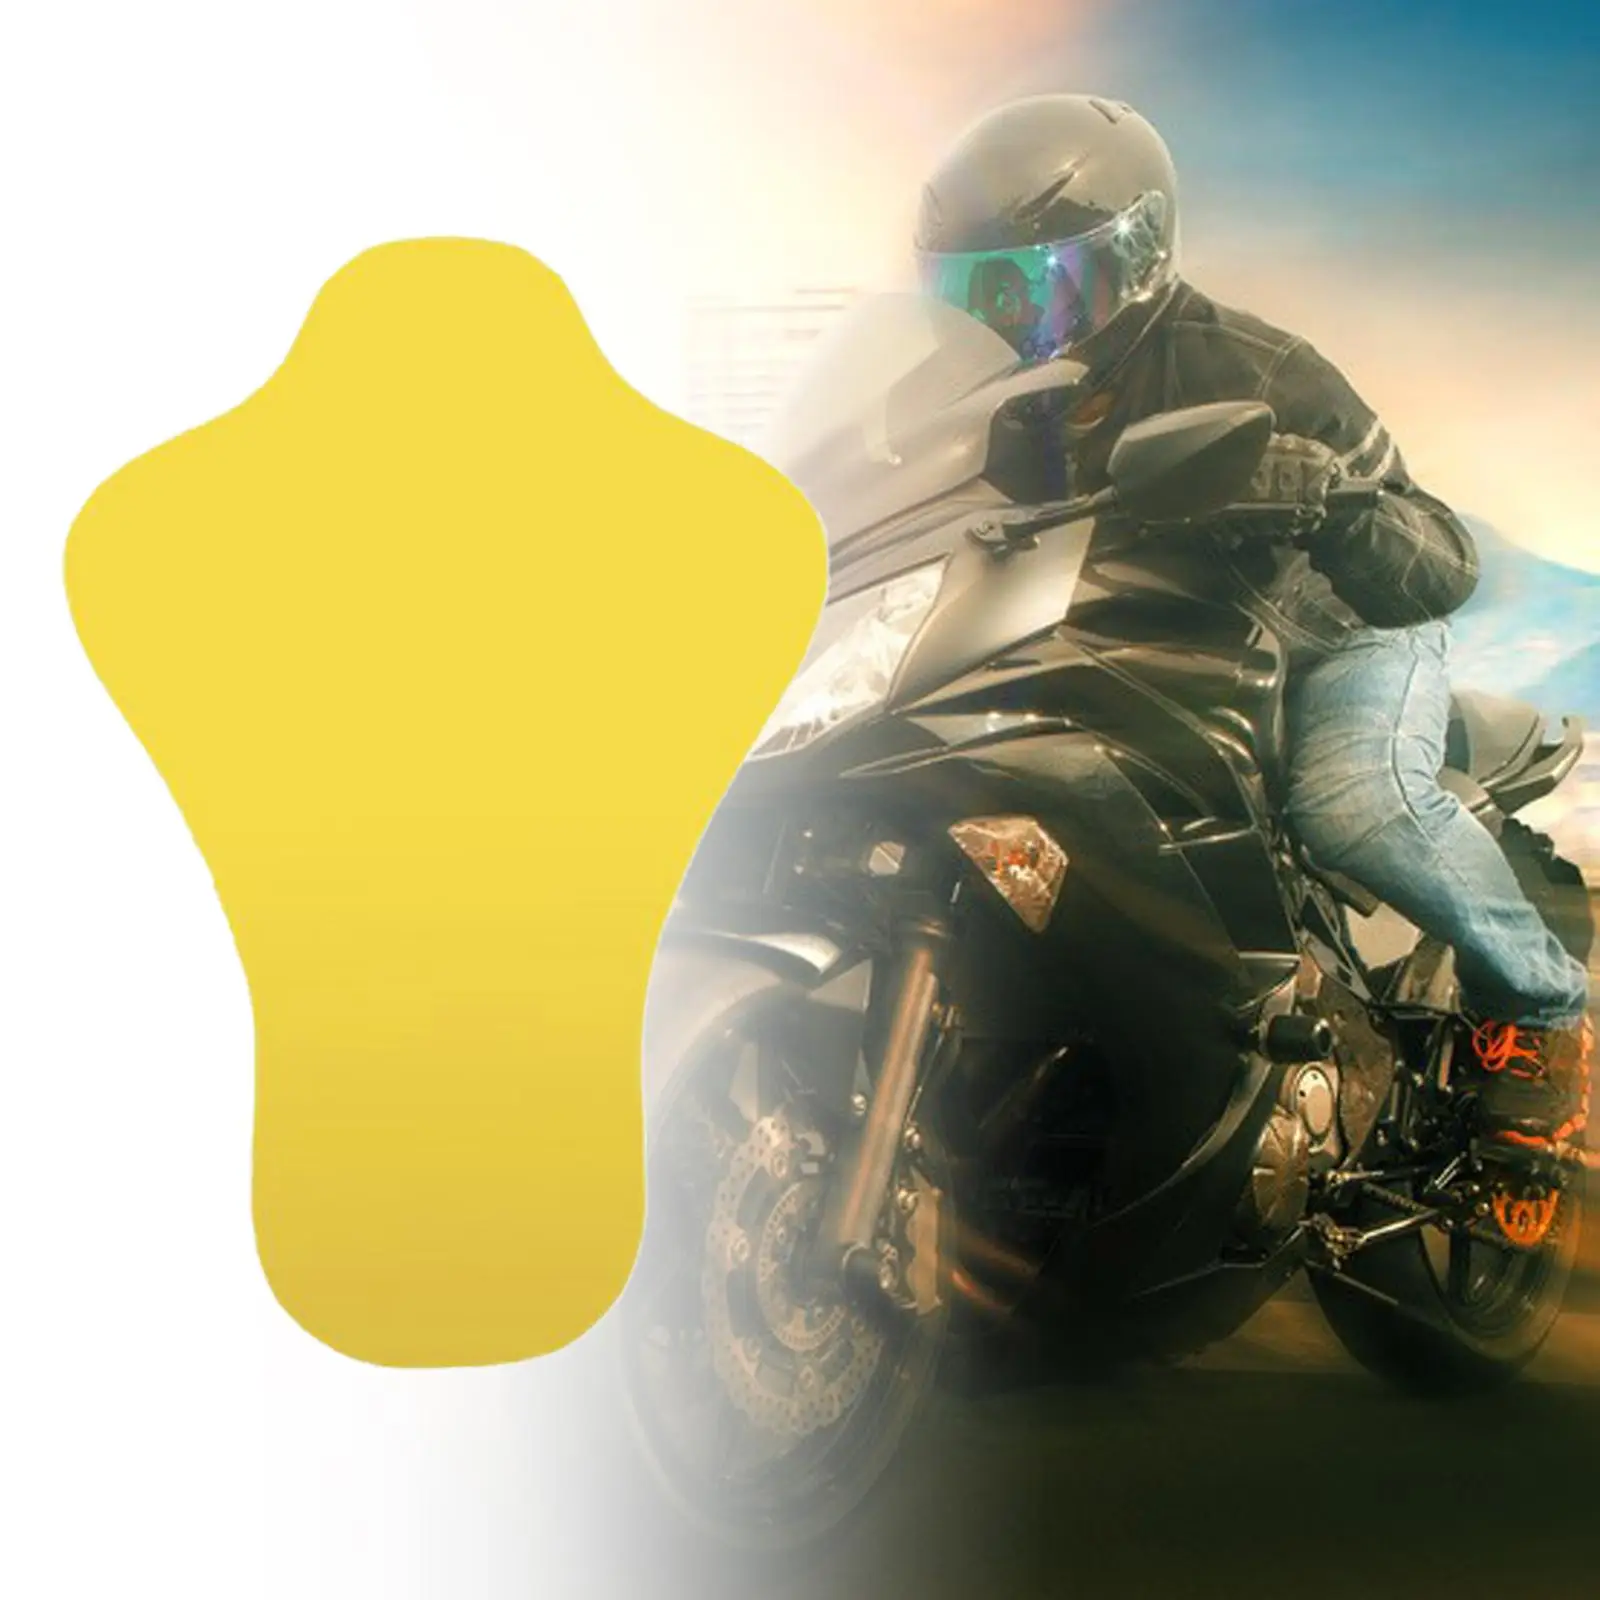 5 Pieces Motorcycle Jacket Insert Armor Protectors Set Riding Racing Guard